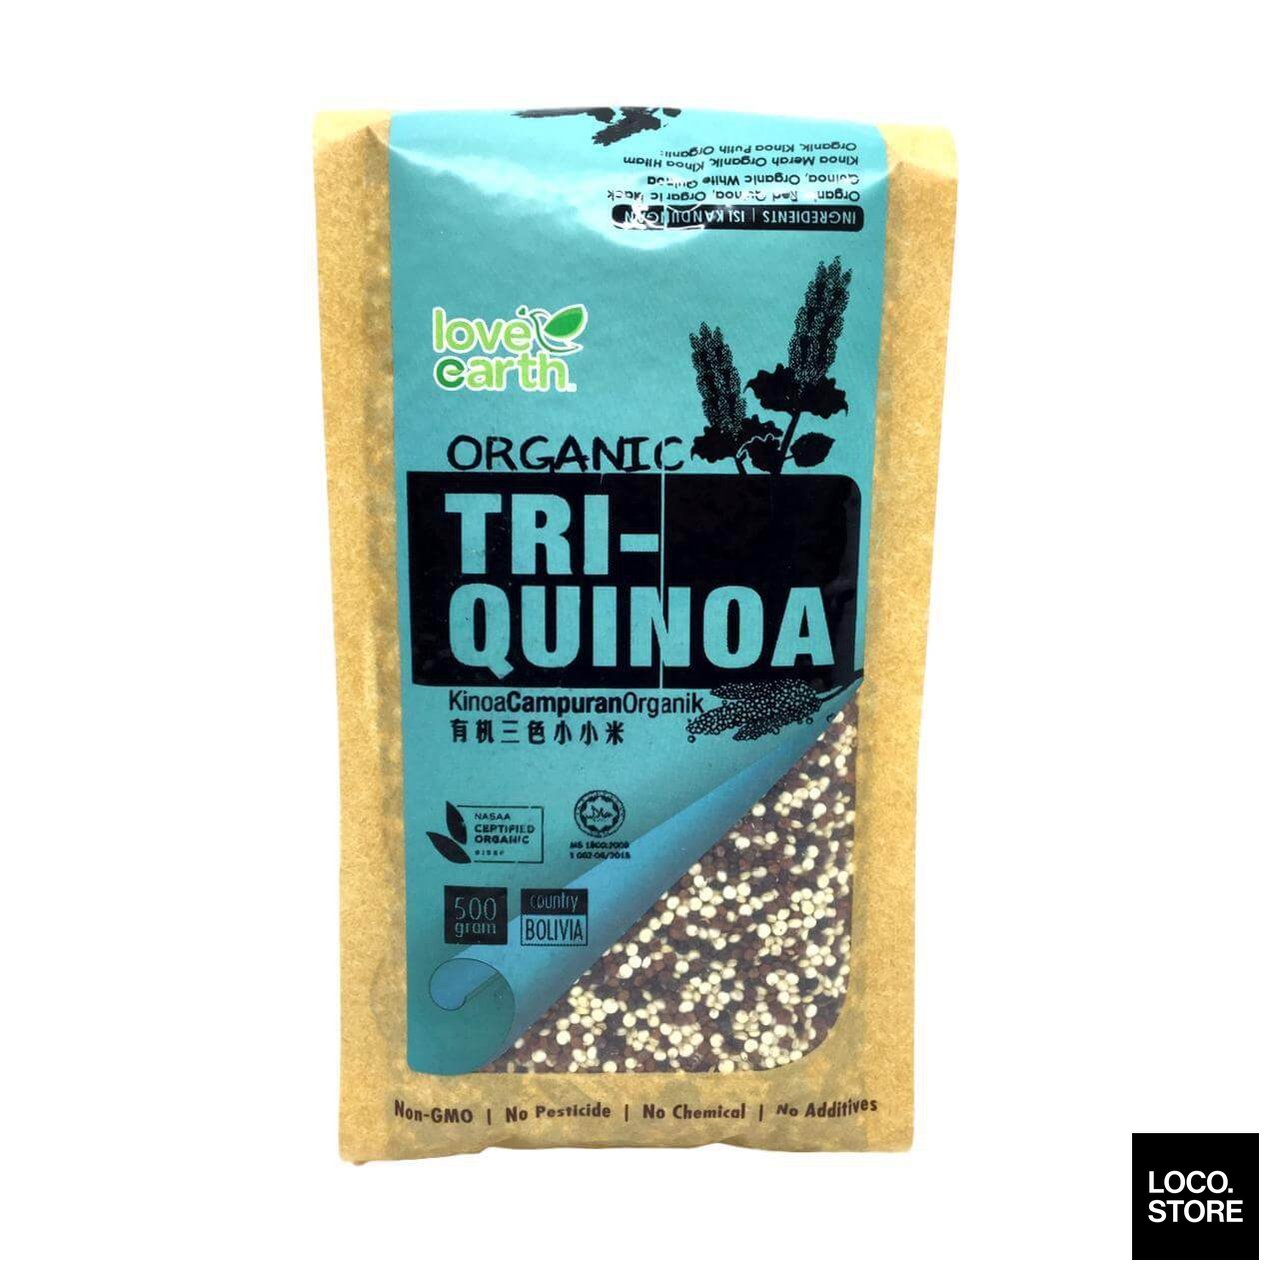 Love Earth Organic Tri-Quinoa 500g